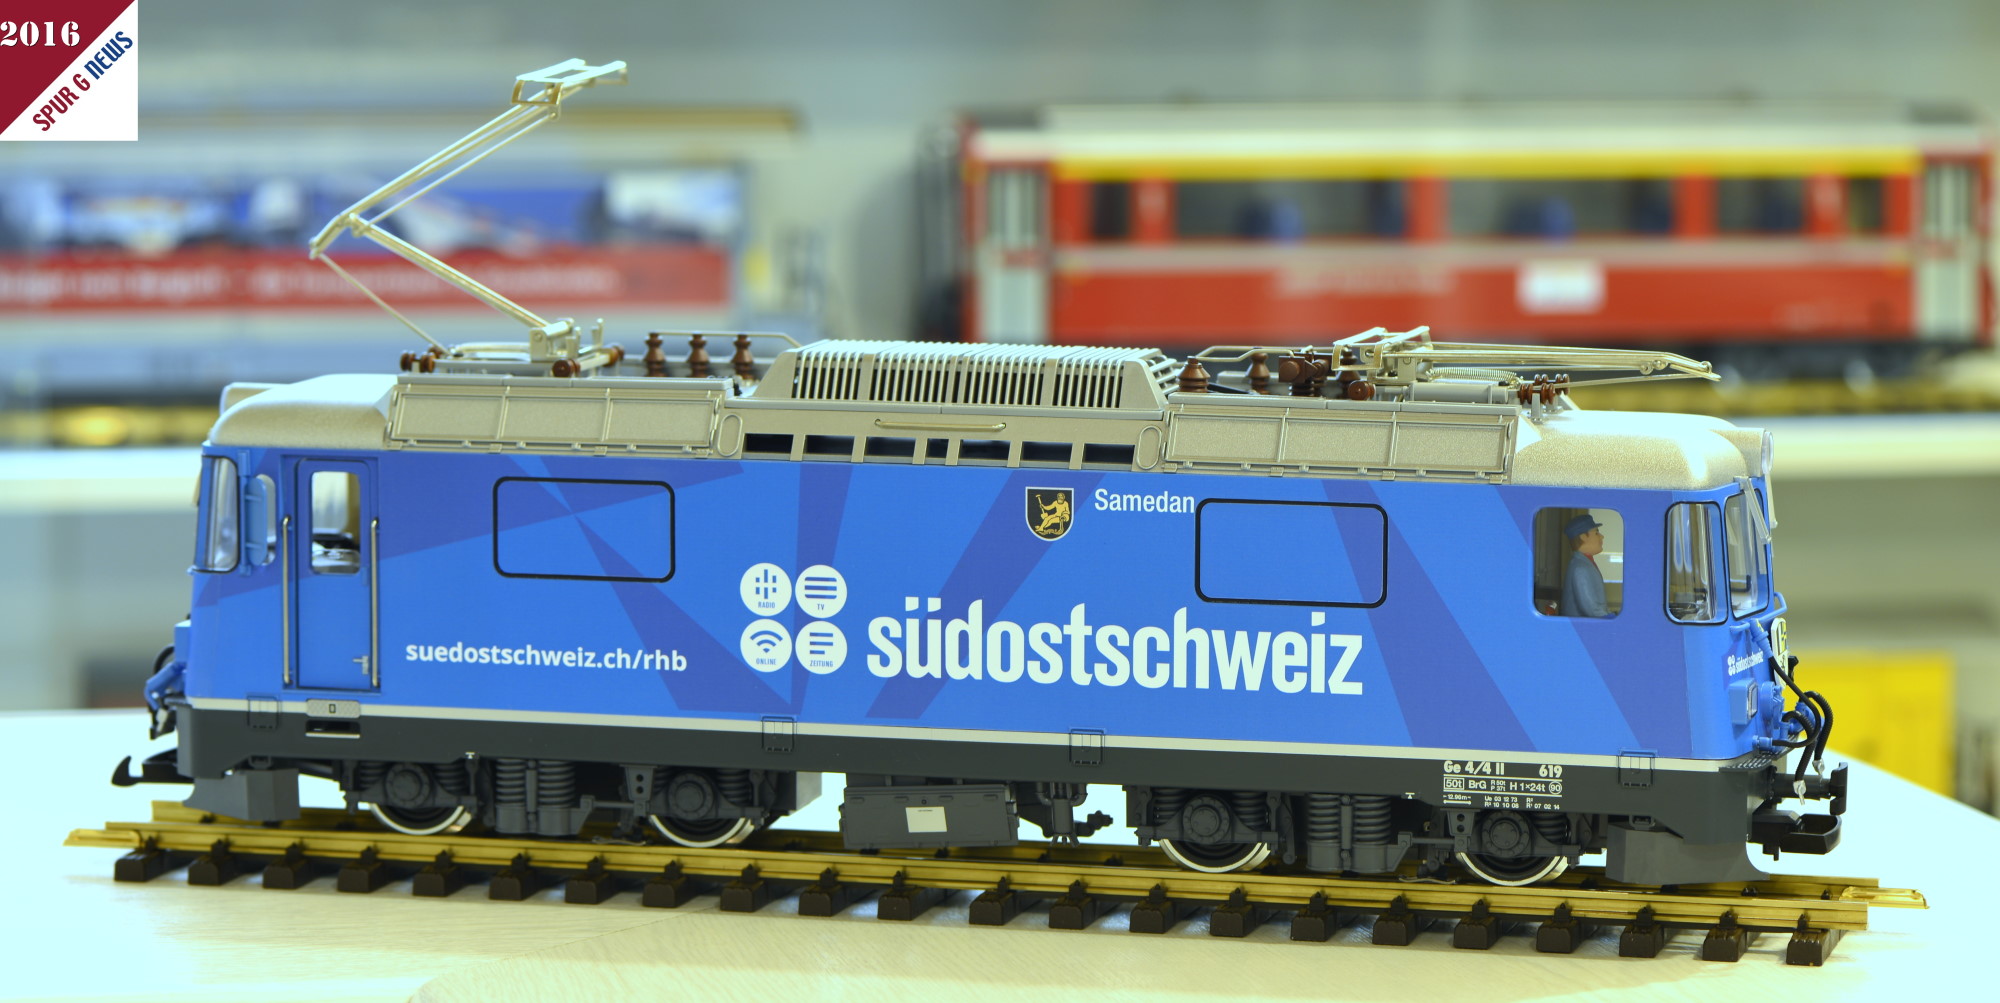 Kiss Modellbahnservice - Sdostschweiz